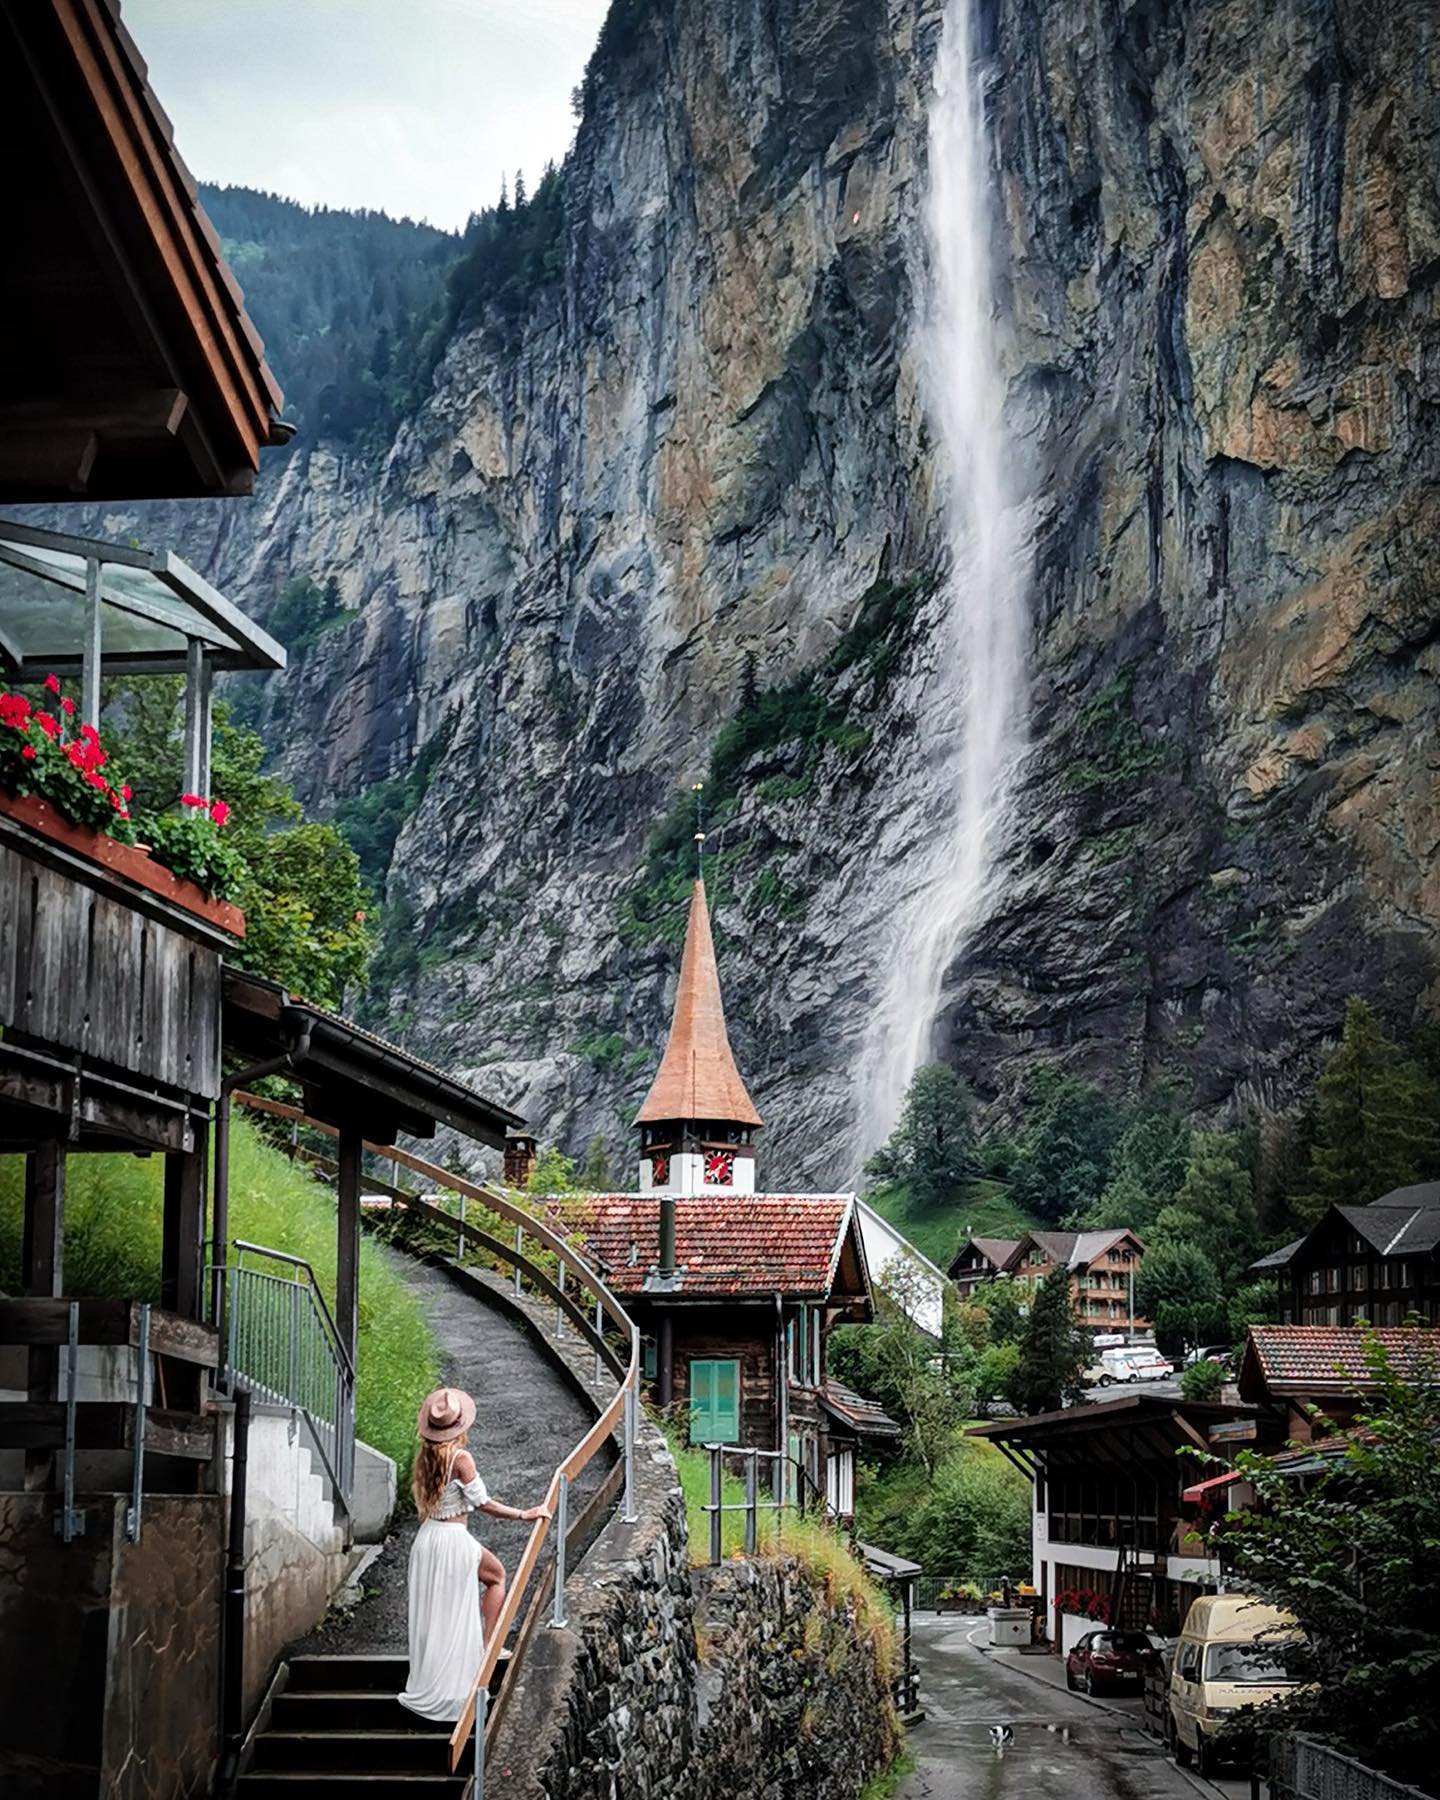 The Valley of the 72 waterfalls. Like a precious flower 🌺 the village of Lauterbrunnen lies embedded in this magical valley. 
Have you been there and did you like it? 
.
.
📸by @luca.schranz 
.
.
#lauterbrunnen #berneroberland #bern #schweiz #schweiz🇨🇭 #Switzerland #switzerland🇨🇭 #swiss #staubbachfall #jungfrauregion #travelgirl #iamtb